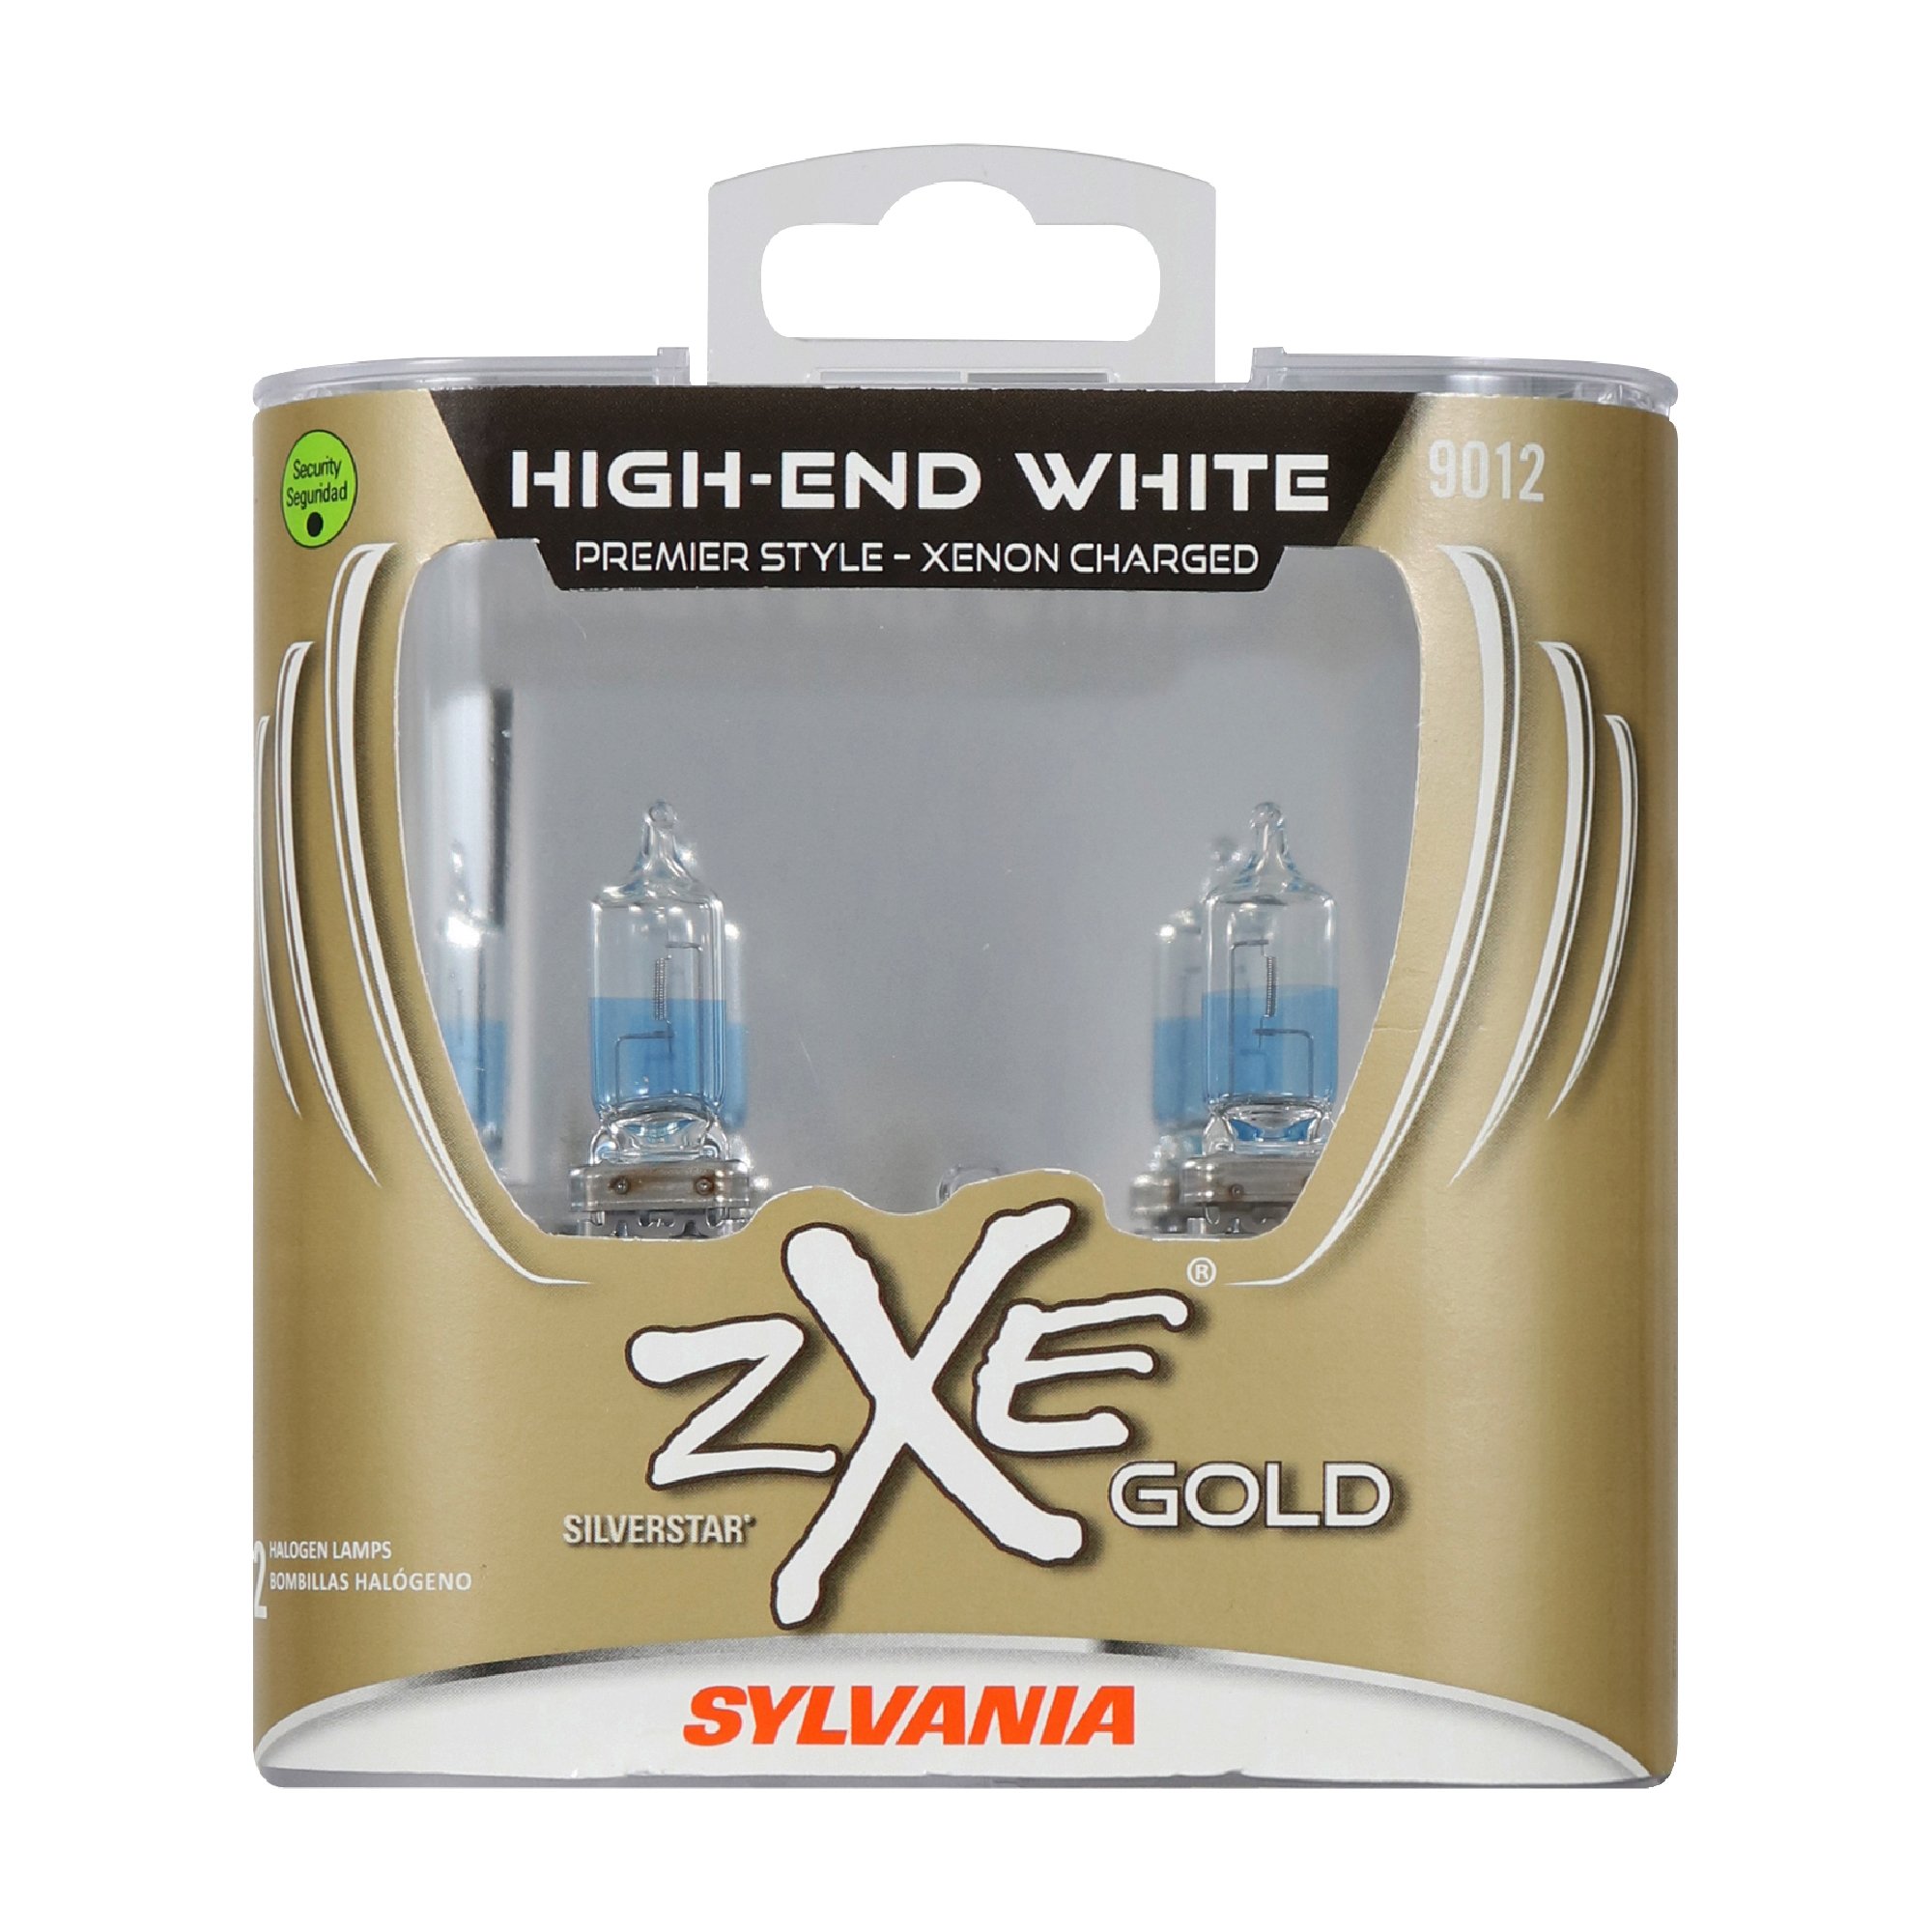 SYLVANIA 9012 SilverStar zXe Gold Halogen Headlight Bulb, 2 Pack